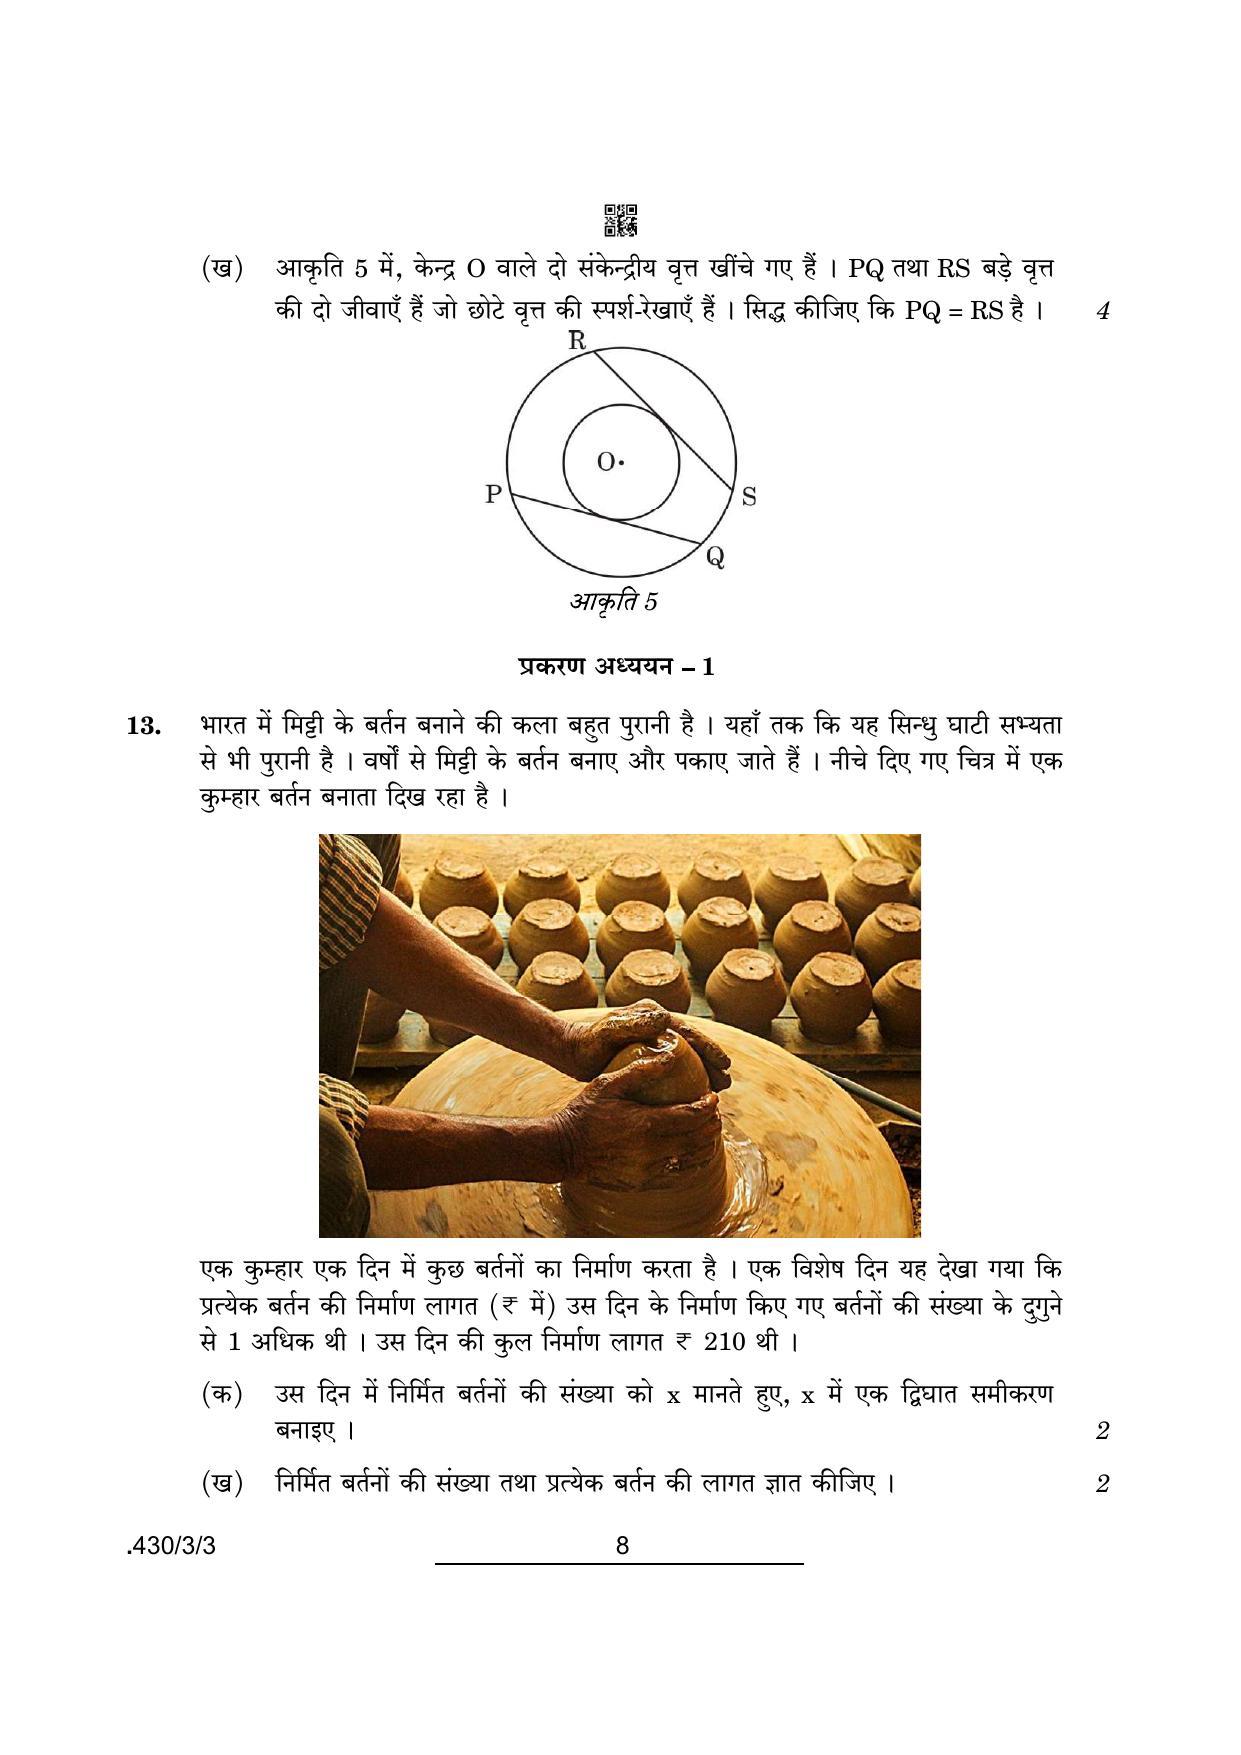 CBSE Class 10 Maths Basic (430/3/3 - SET 3) 2022 Question Paper - Page 8